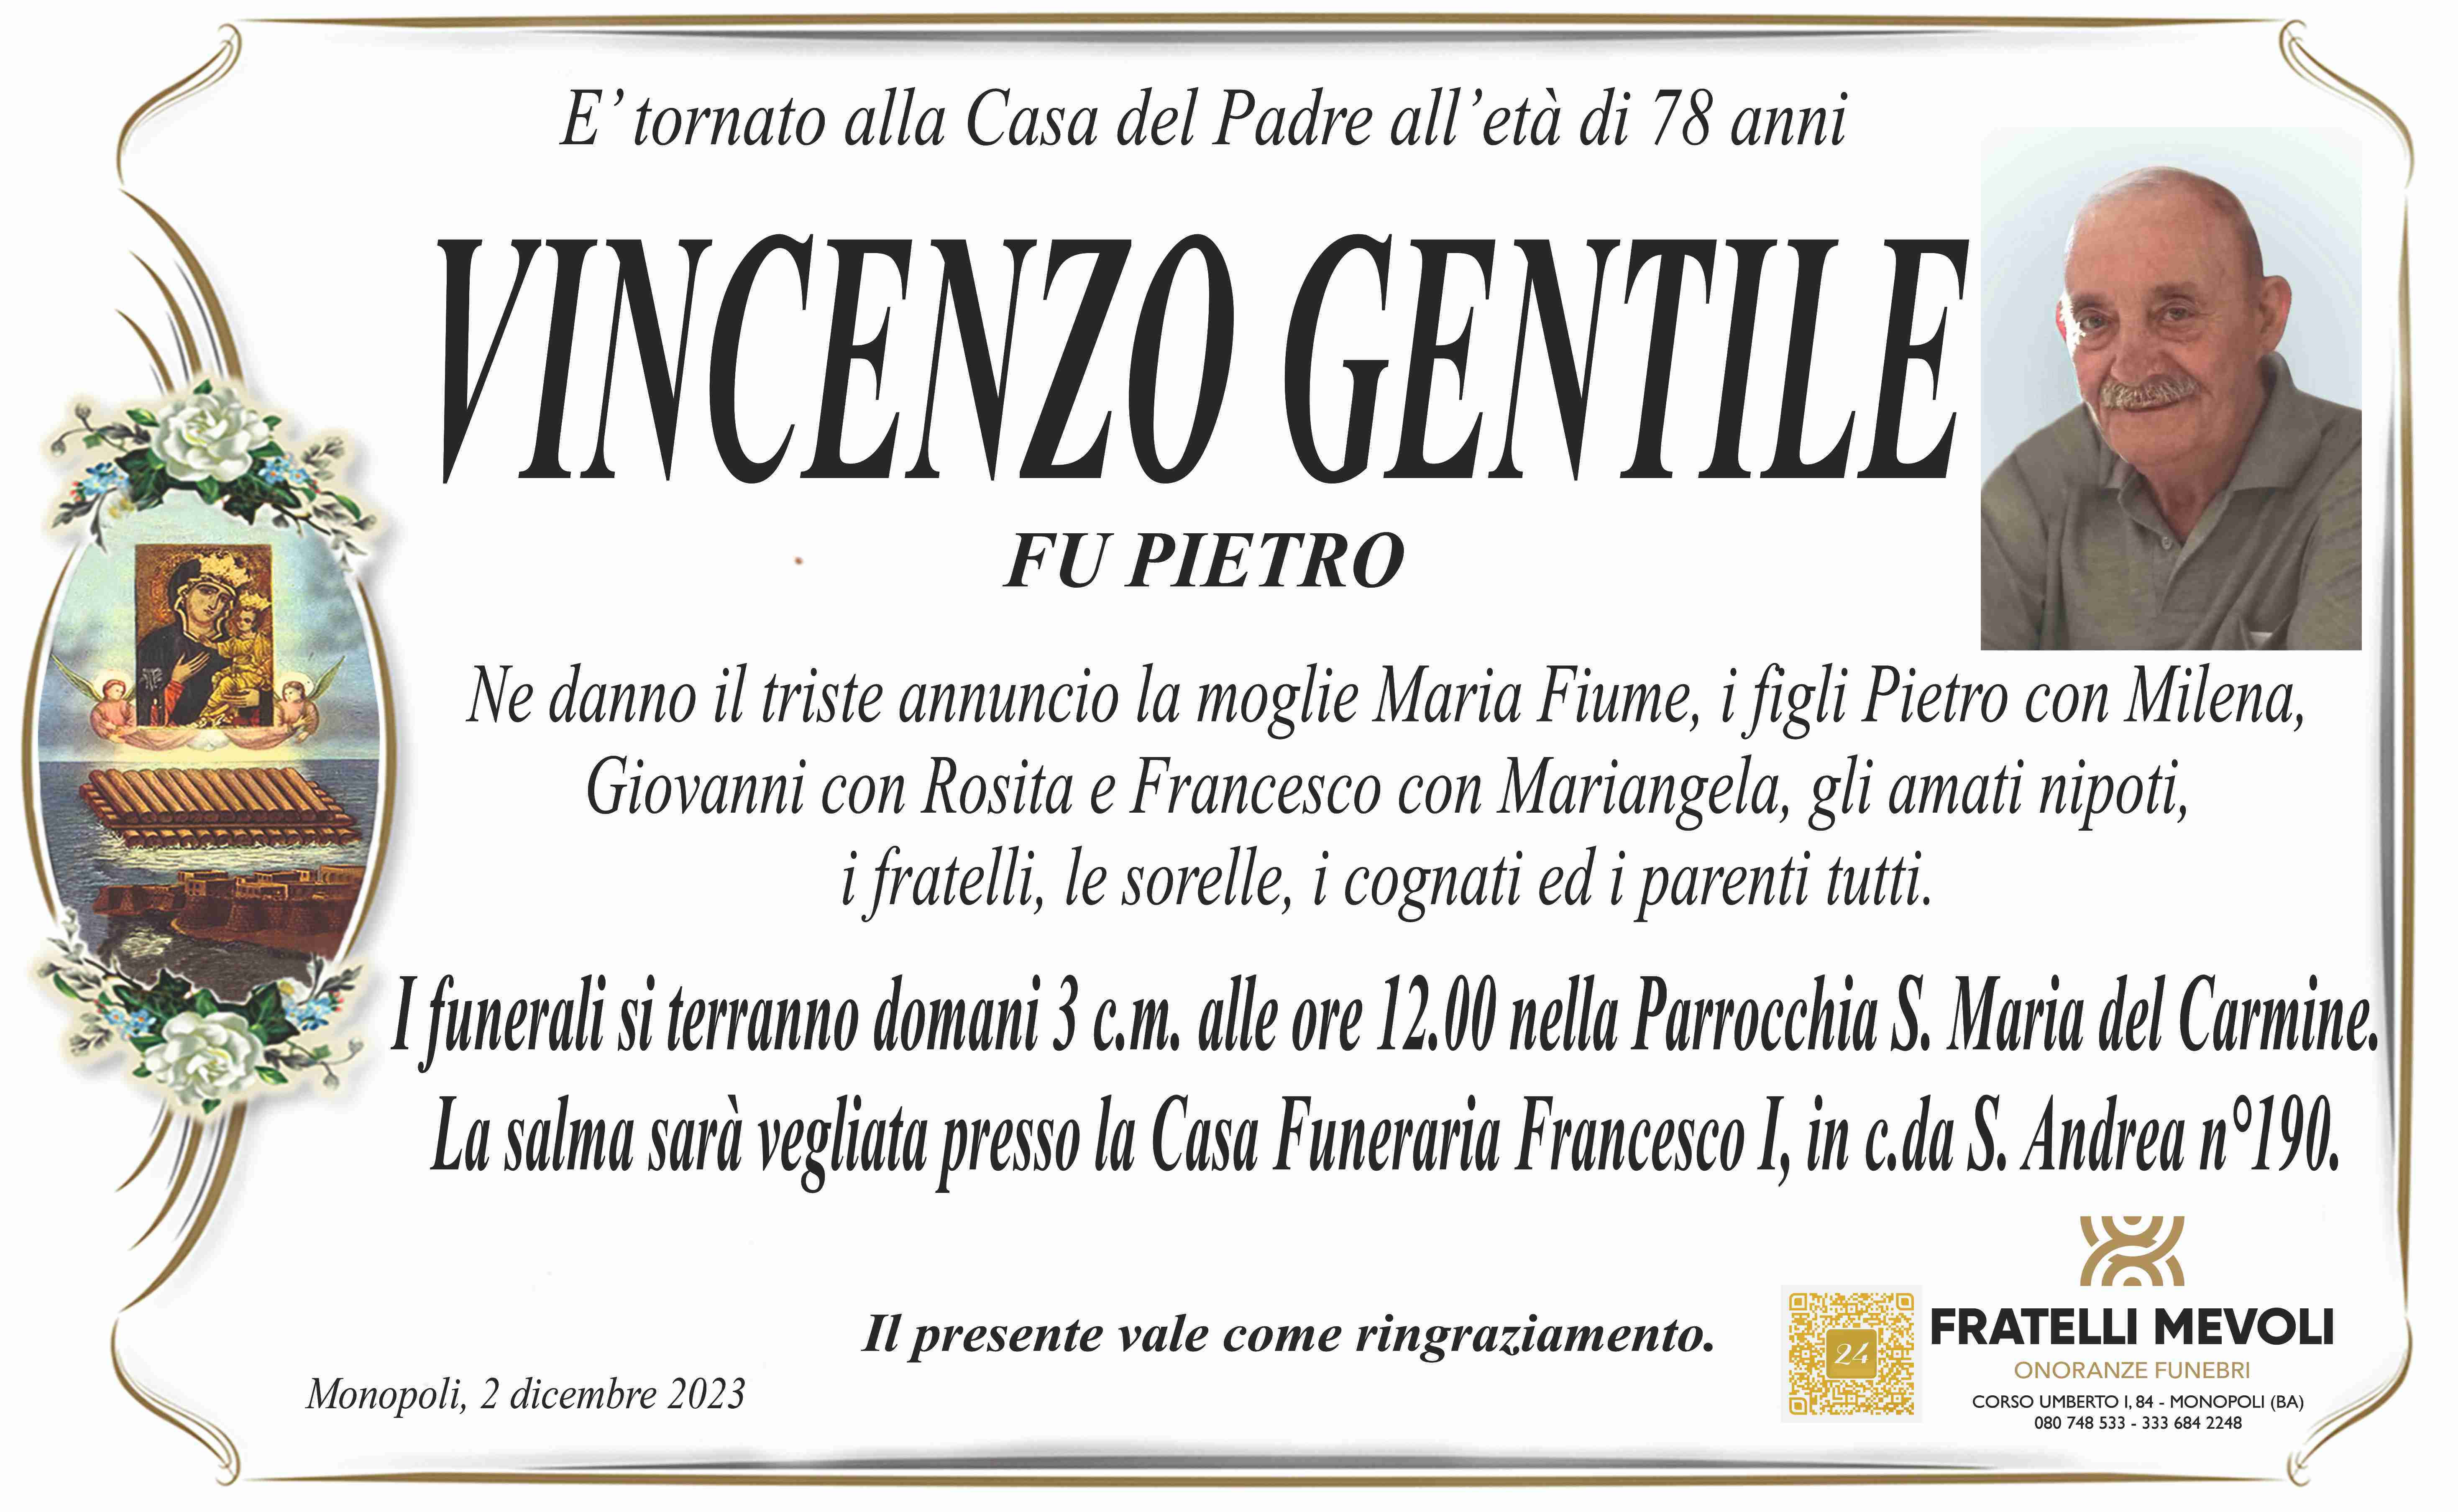 Vincenzo Gentile